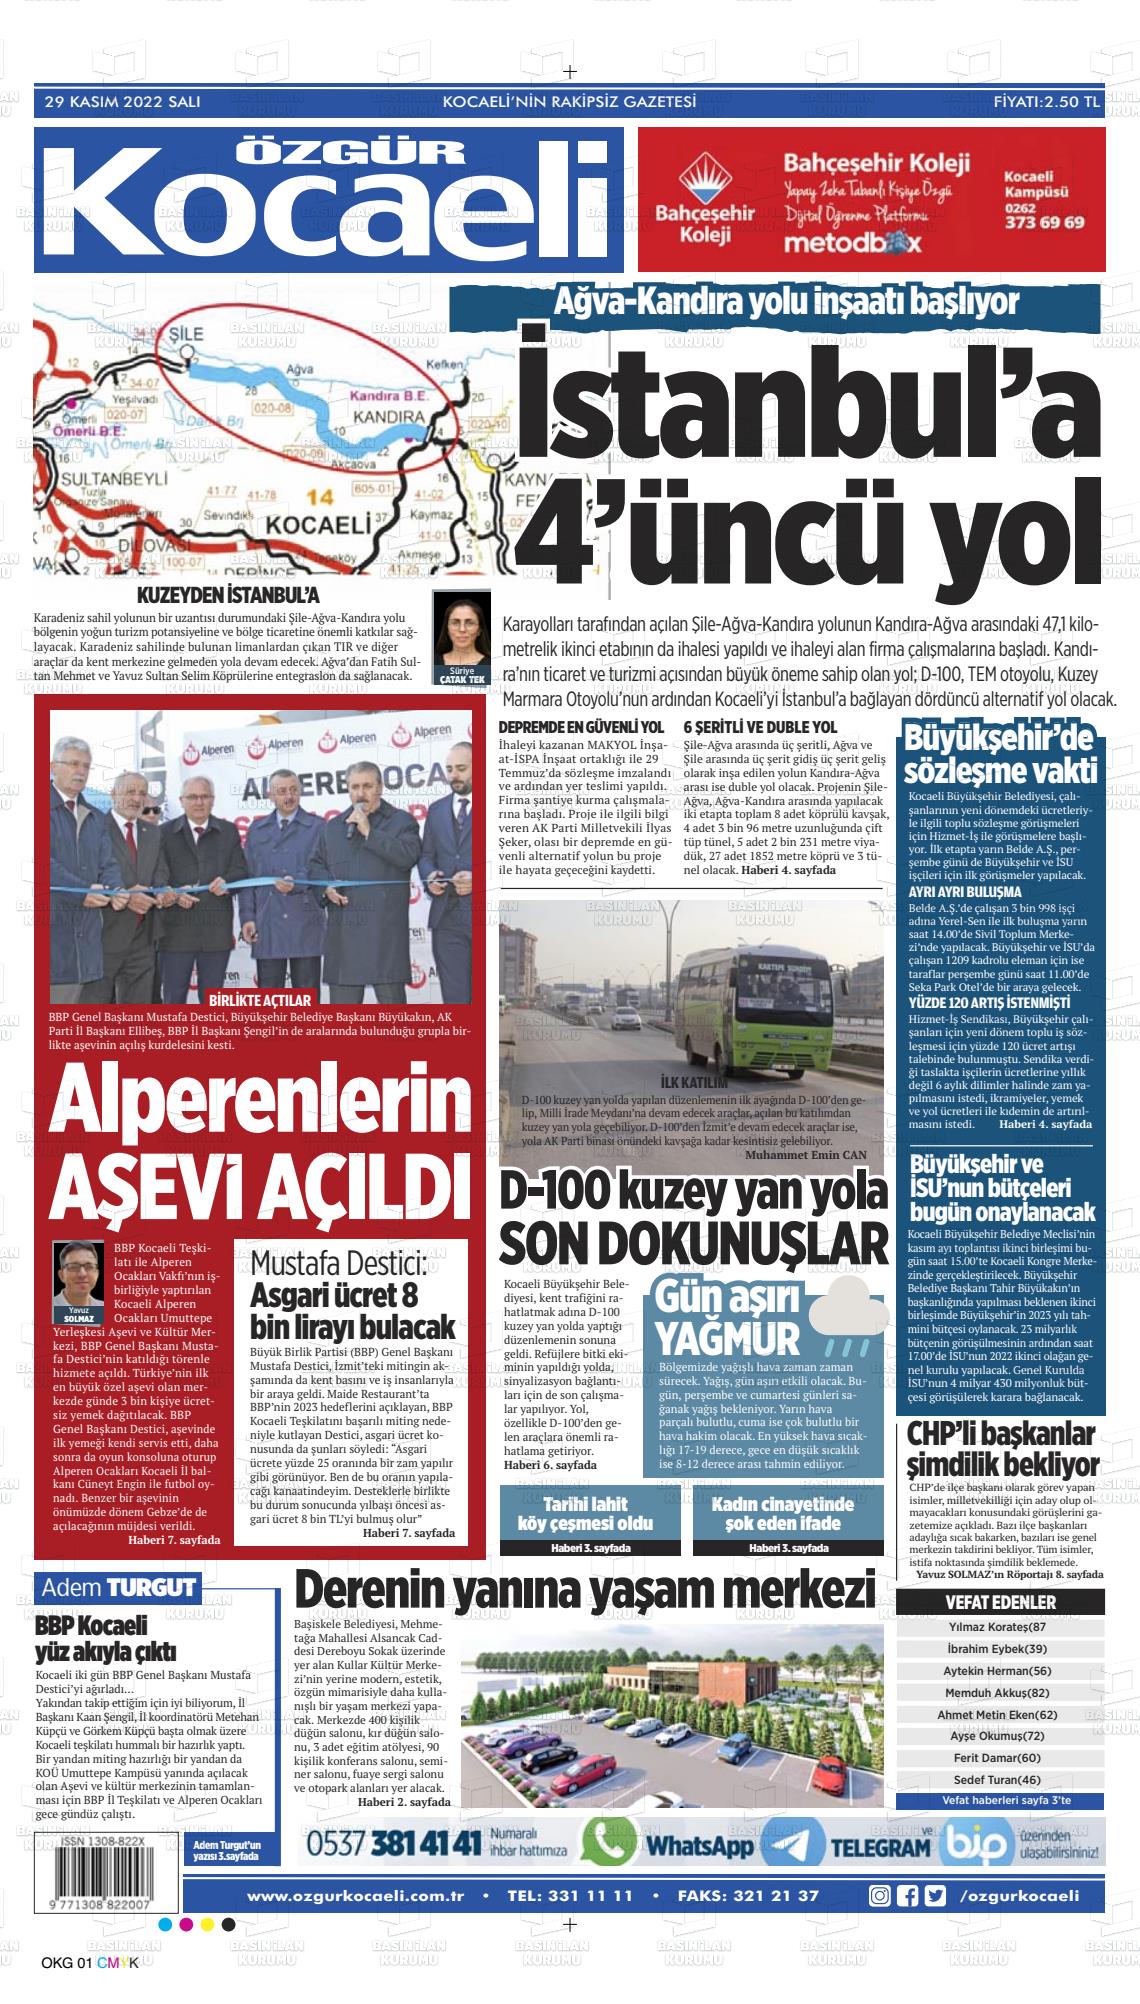 29 Kasım 2022 Özgür Kocaeli Gazete Manşeti